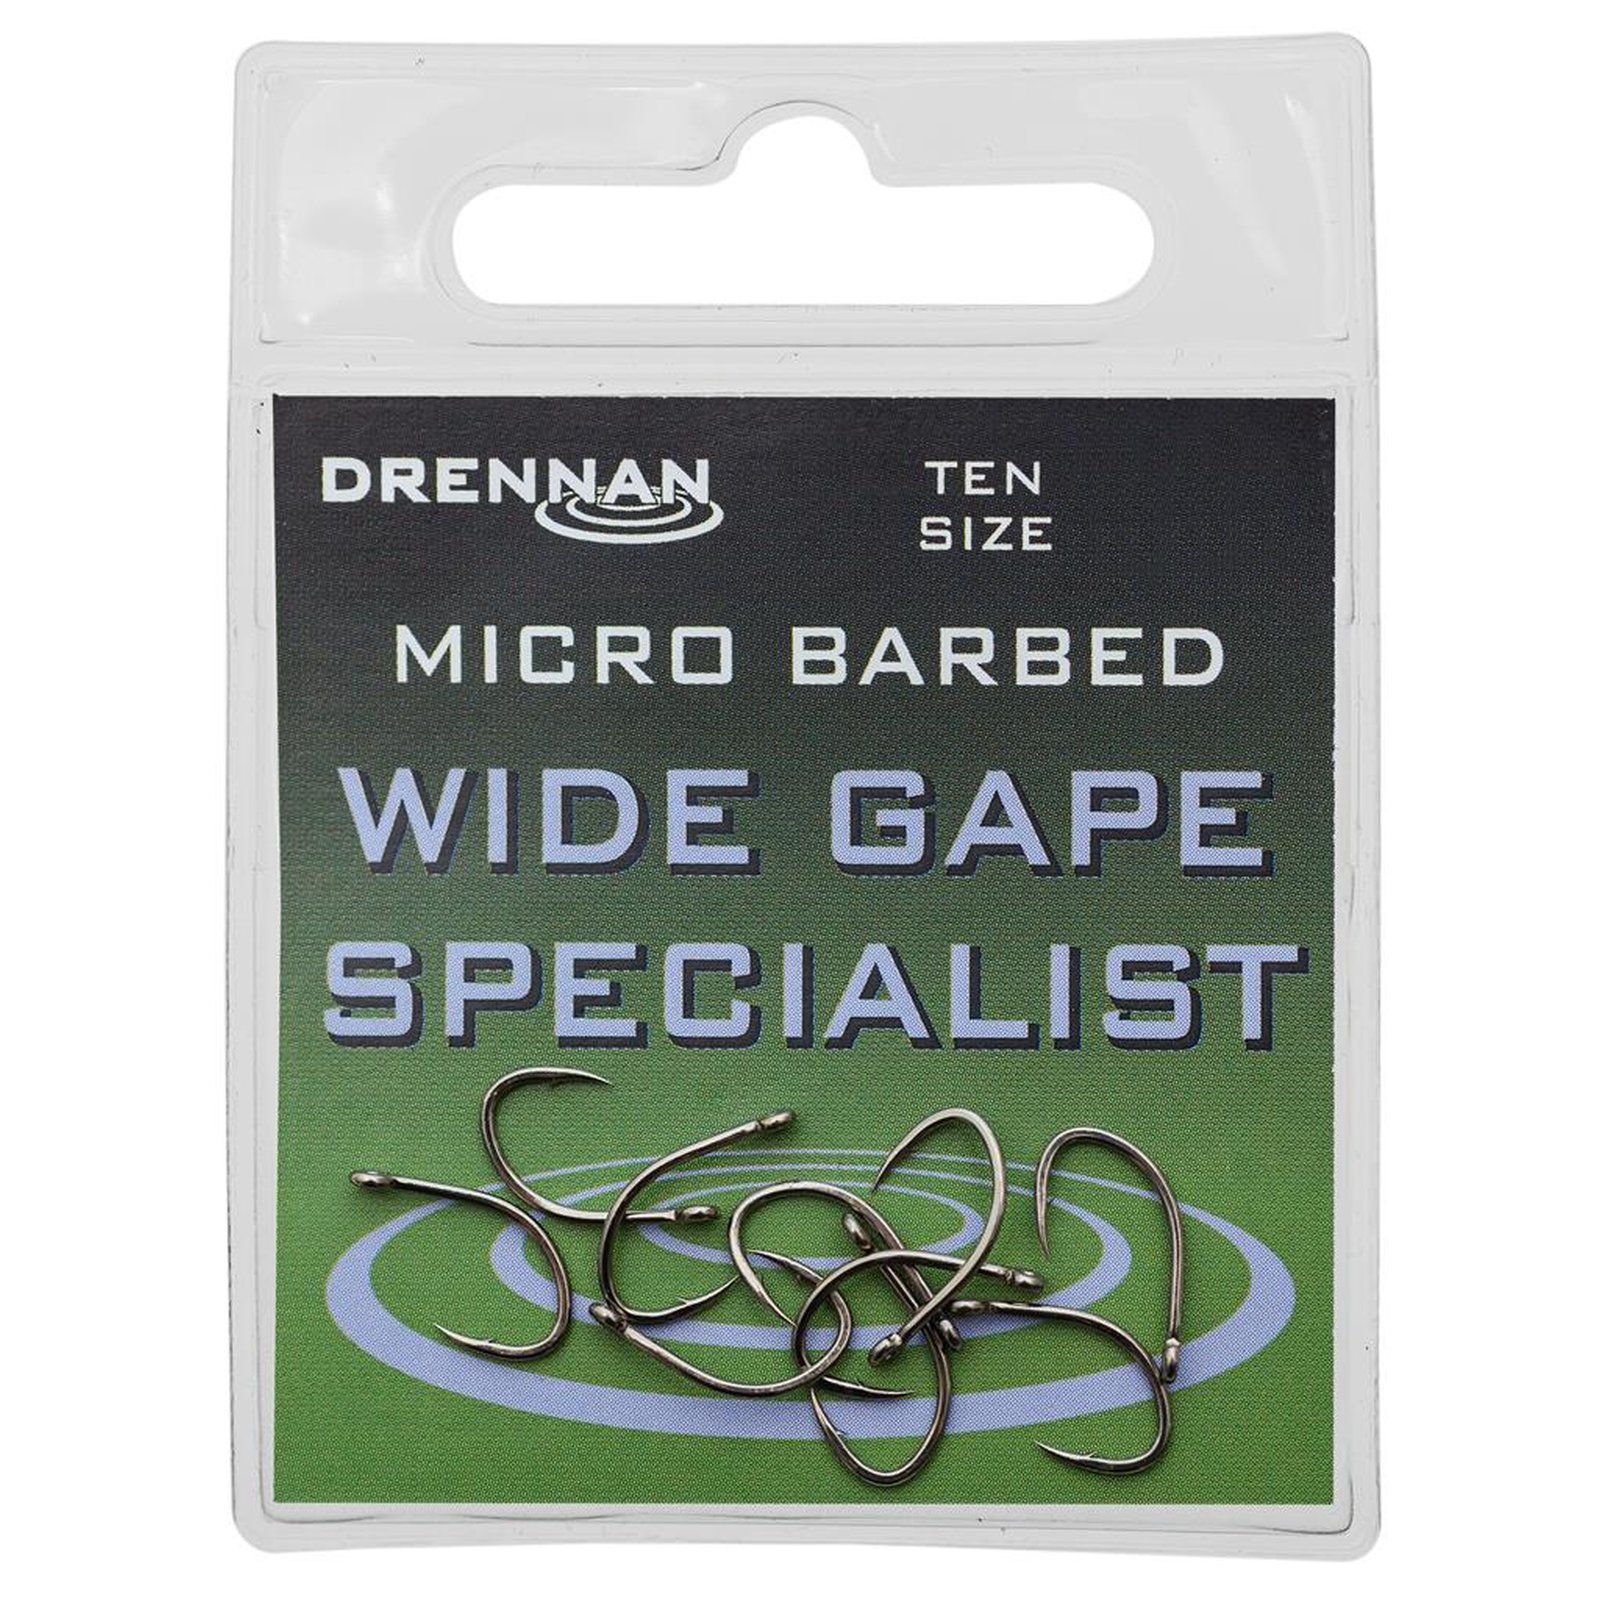 Drennan Wide Gape Specialist micro barbed 4